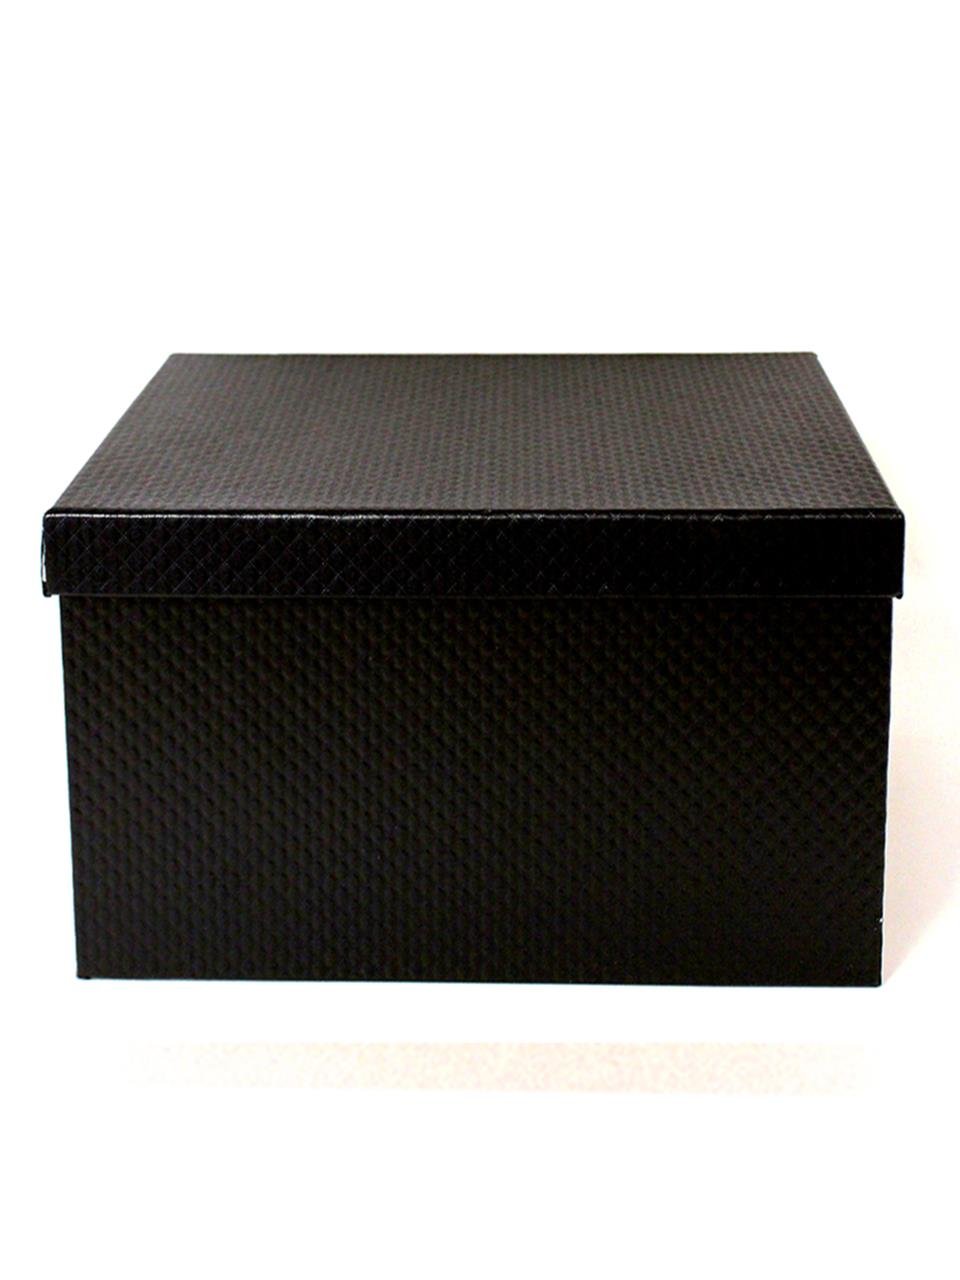 Hediye Kutusu Deri Görünümlü Dikdörtgen Kutu Siyah 26x31x17 cm